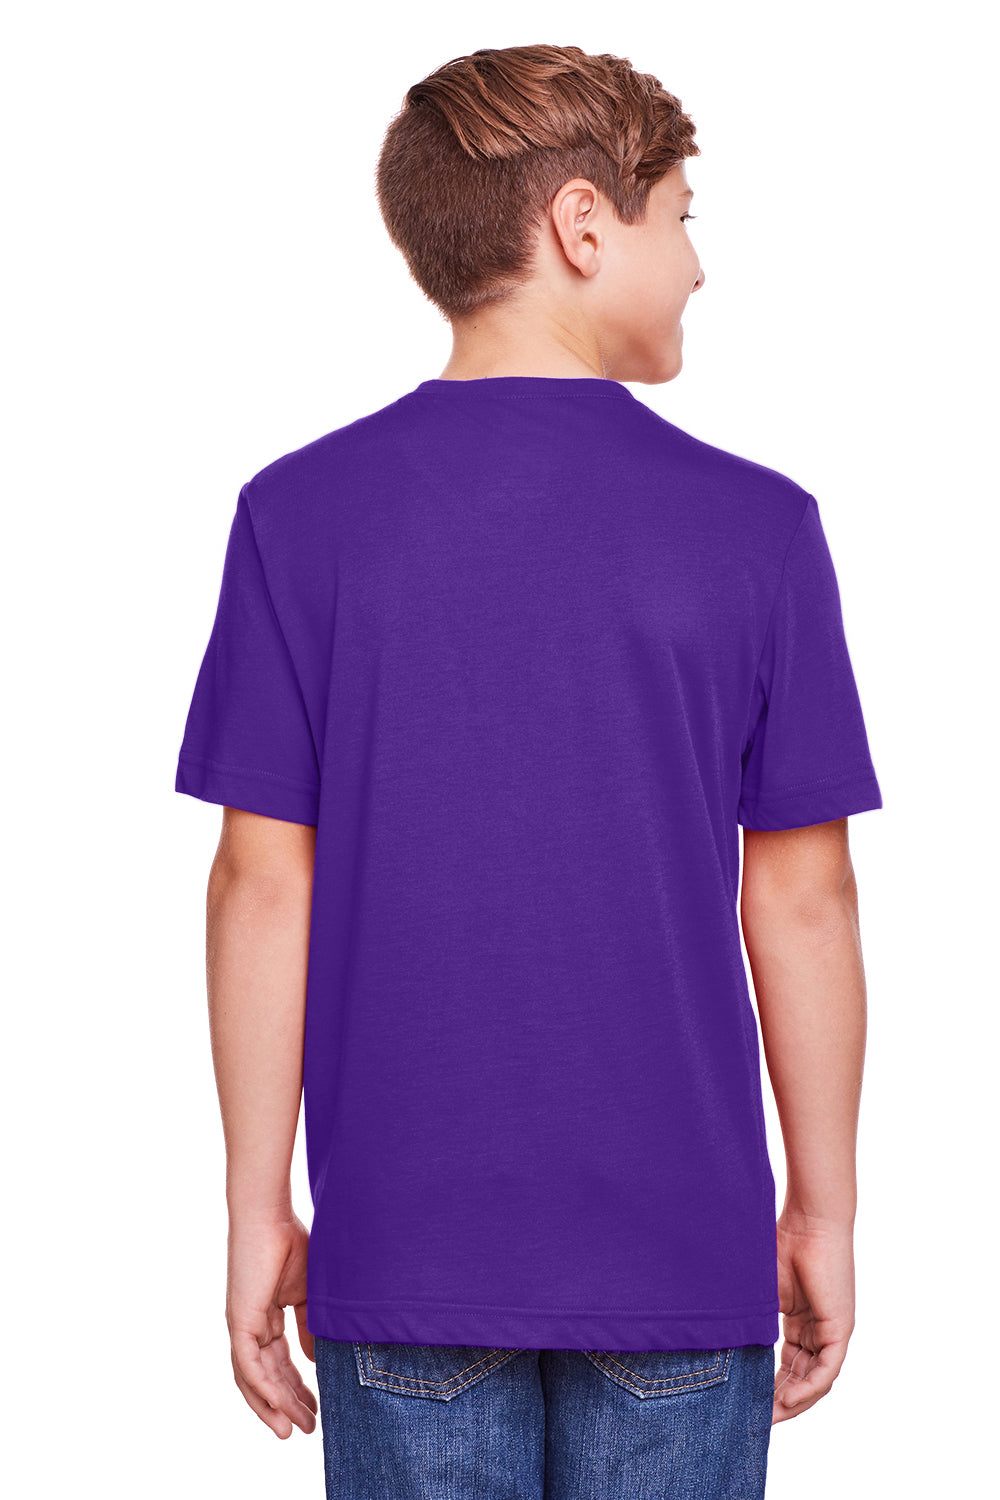 Core 365 CE111Y Youth Fusion ChromaSoft Performance Moisture Wicking Short Sleeve Crewneck T-Shirt Purple Back